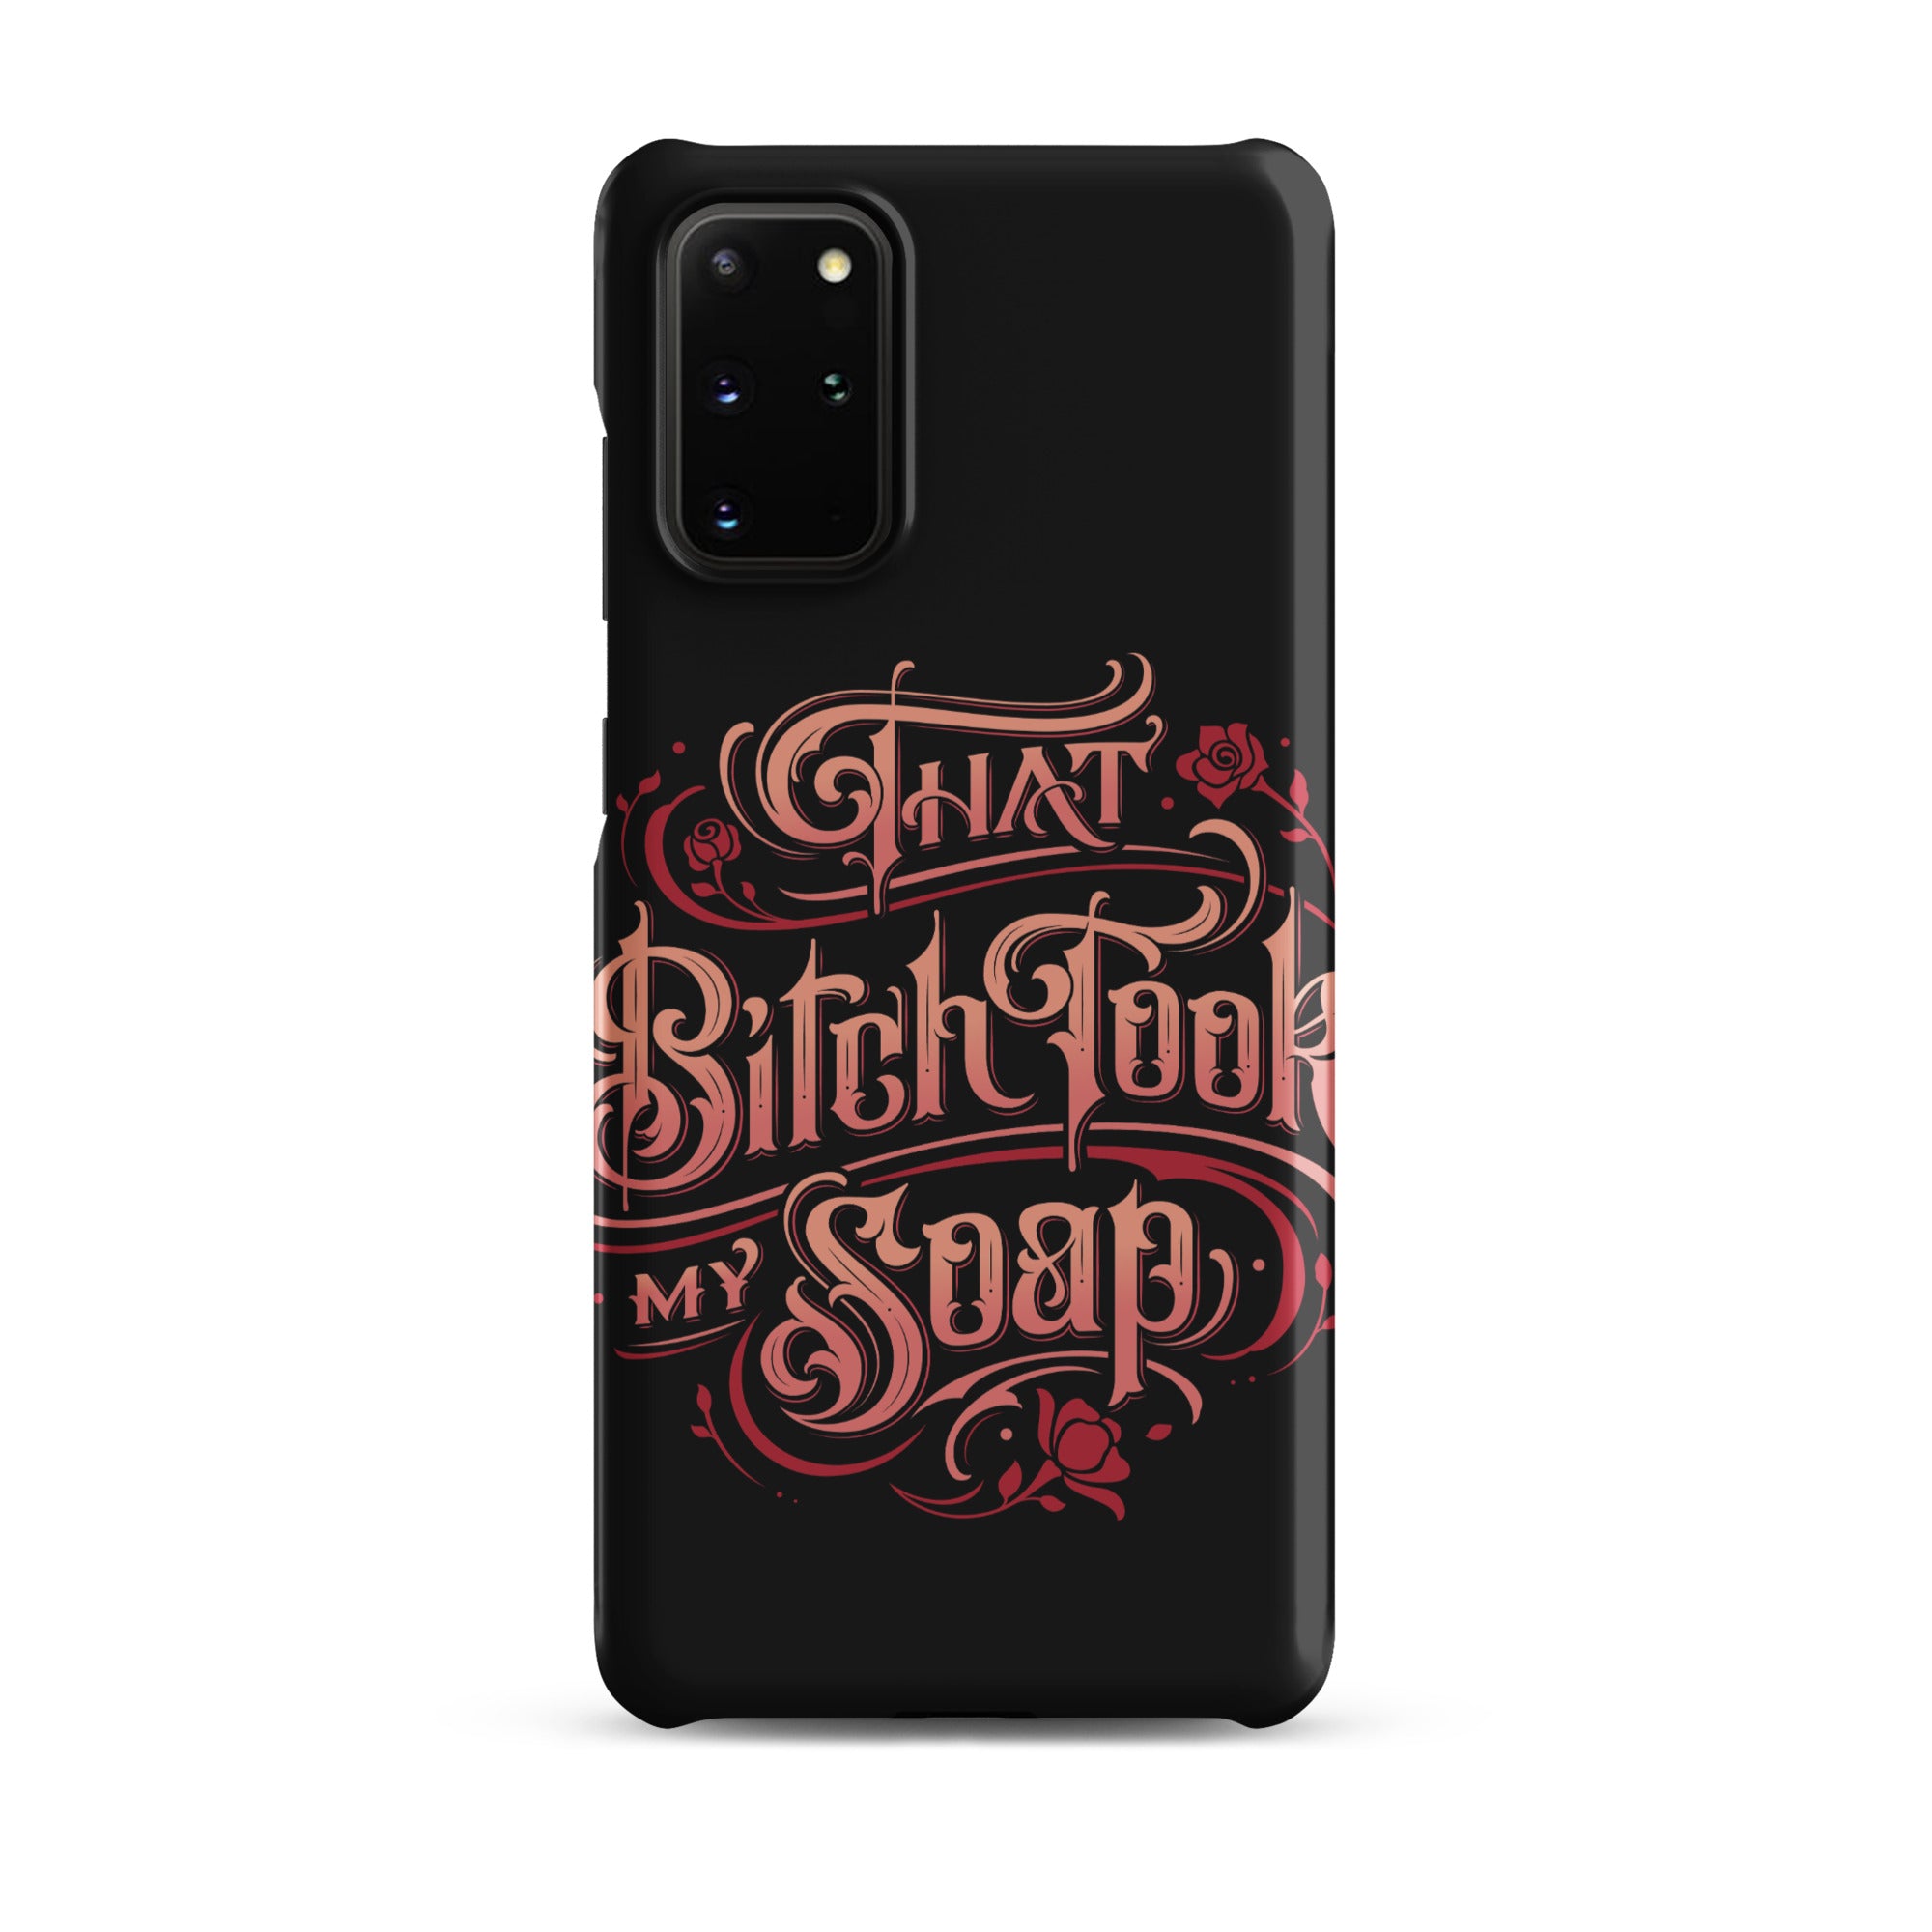 "That bitch took my soap" Samsung Phone Case